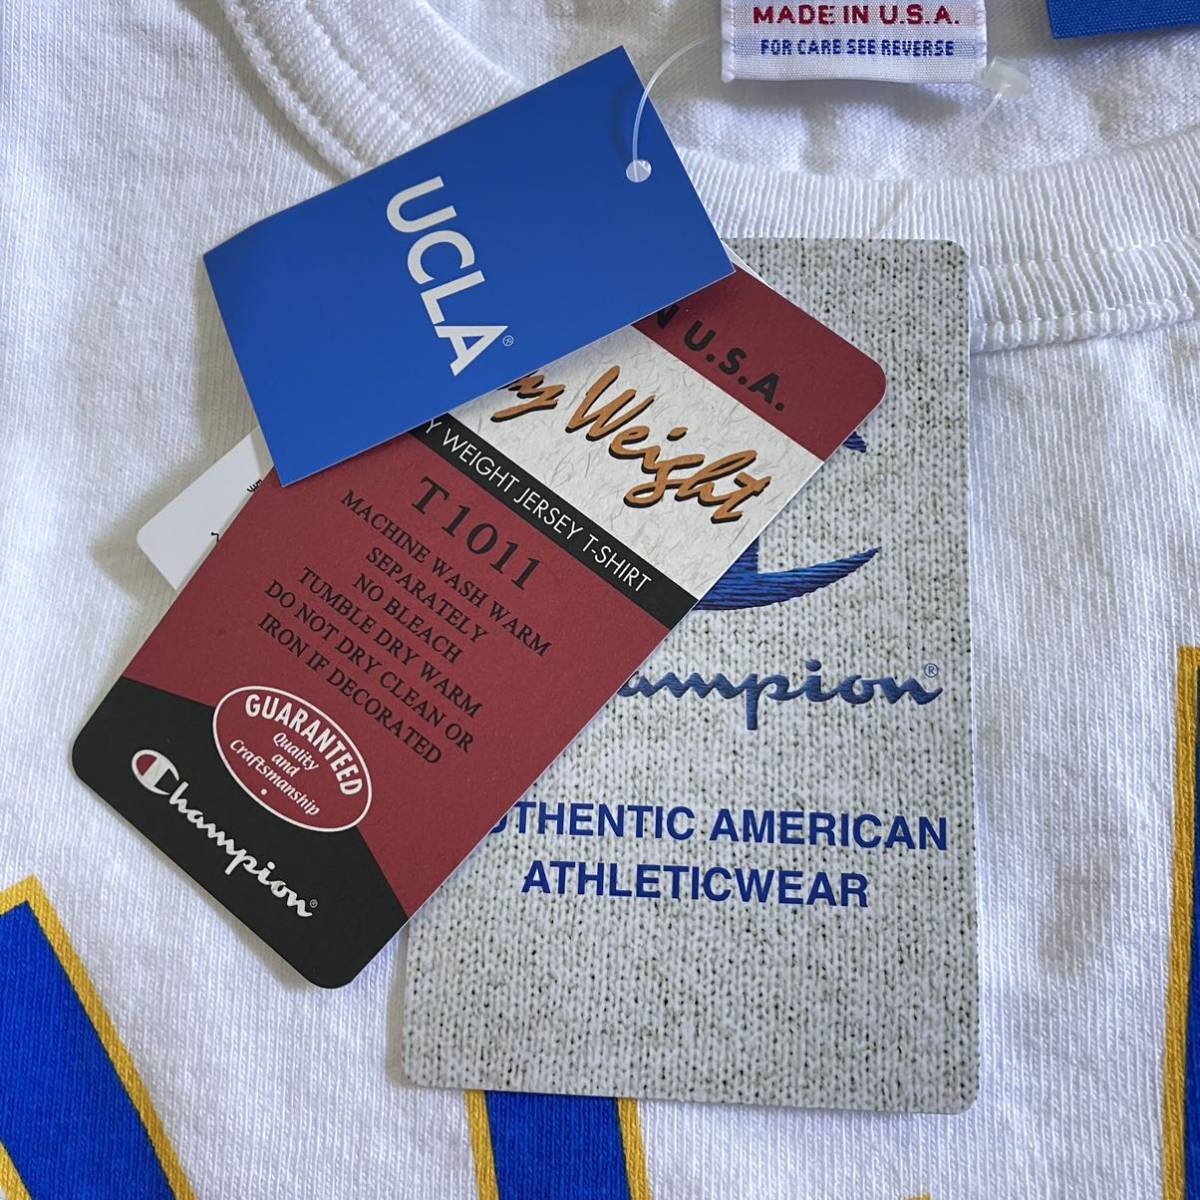 SIZE M CHAMPION T1011 WHITE TEE SHIRT UCLA BRUINS MADE IN USA チャンピオン ホワイト Tシャツ ブルーインズ バスケット アメリカ製